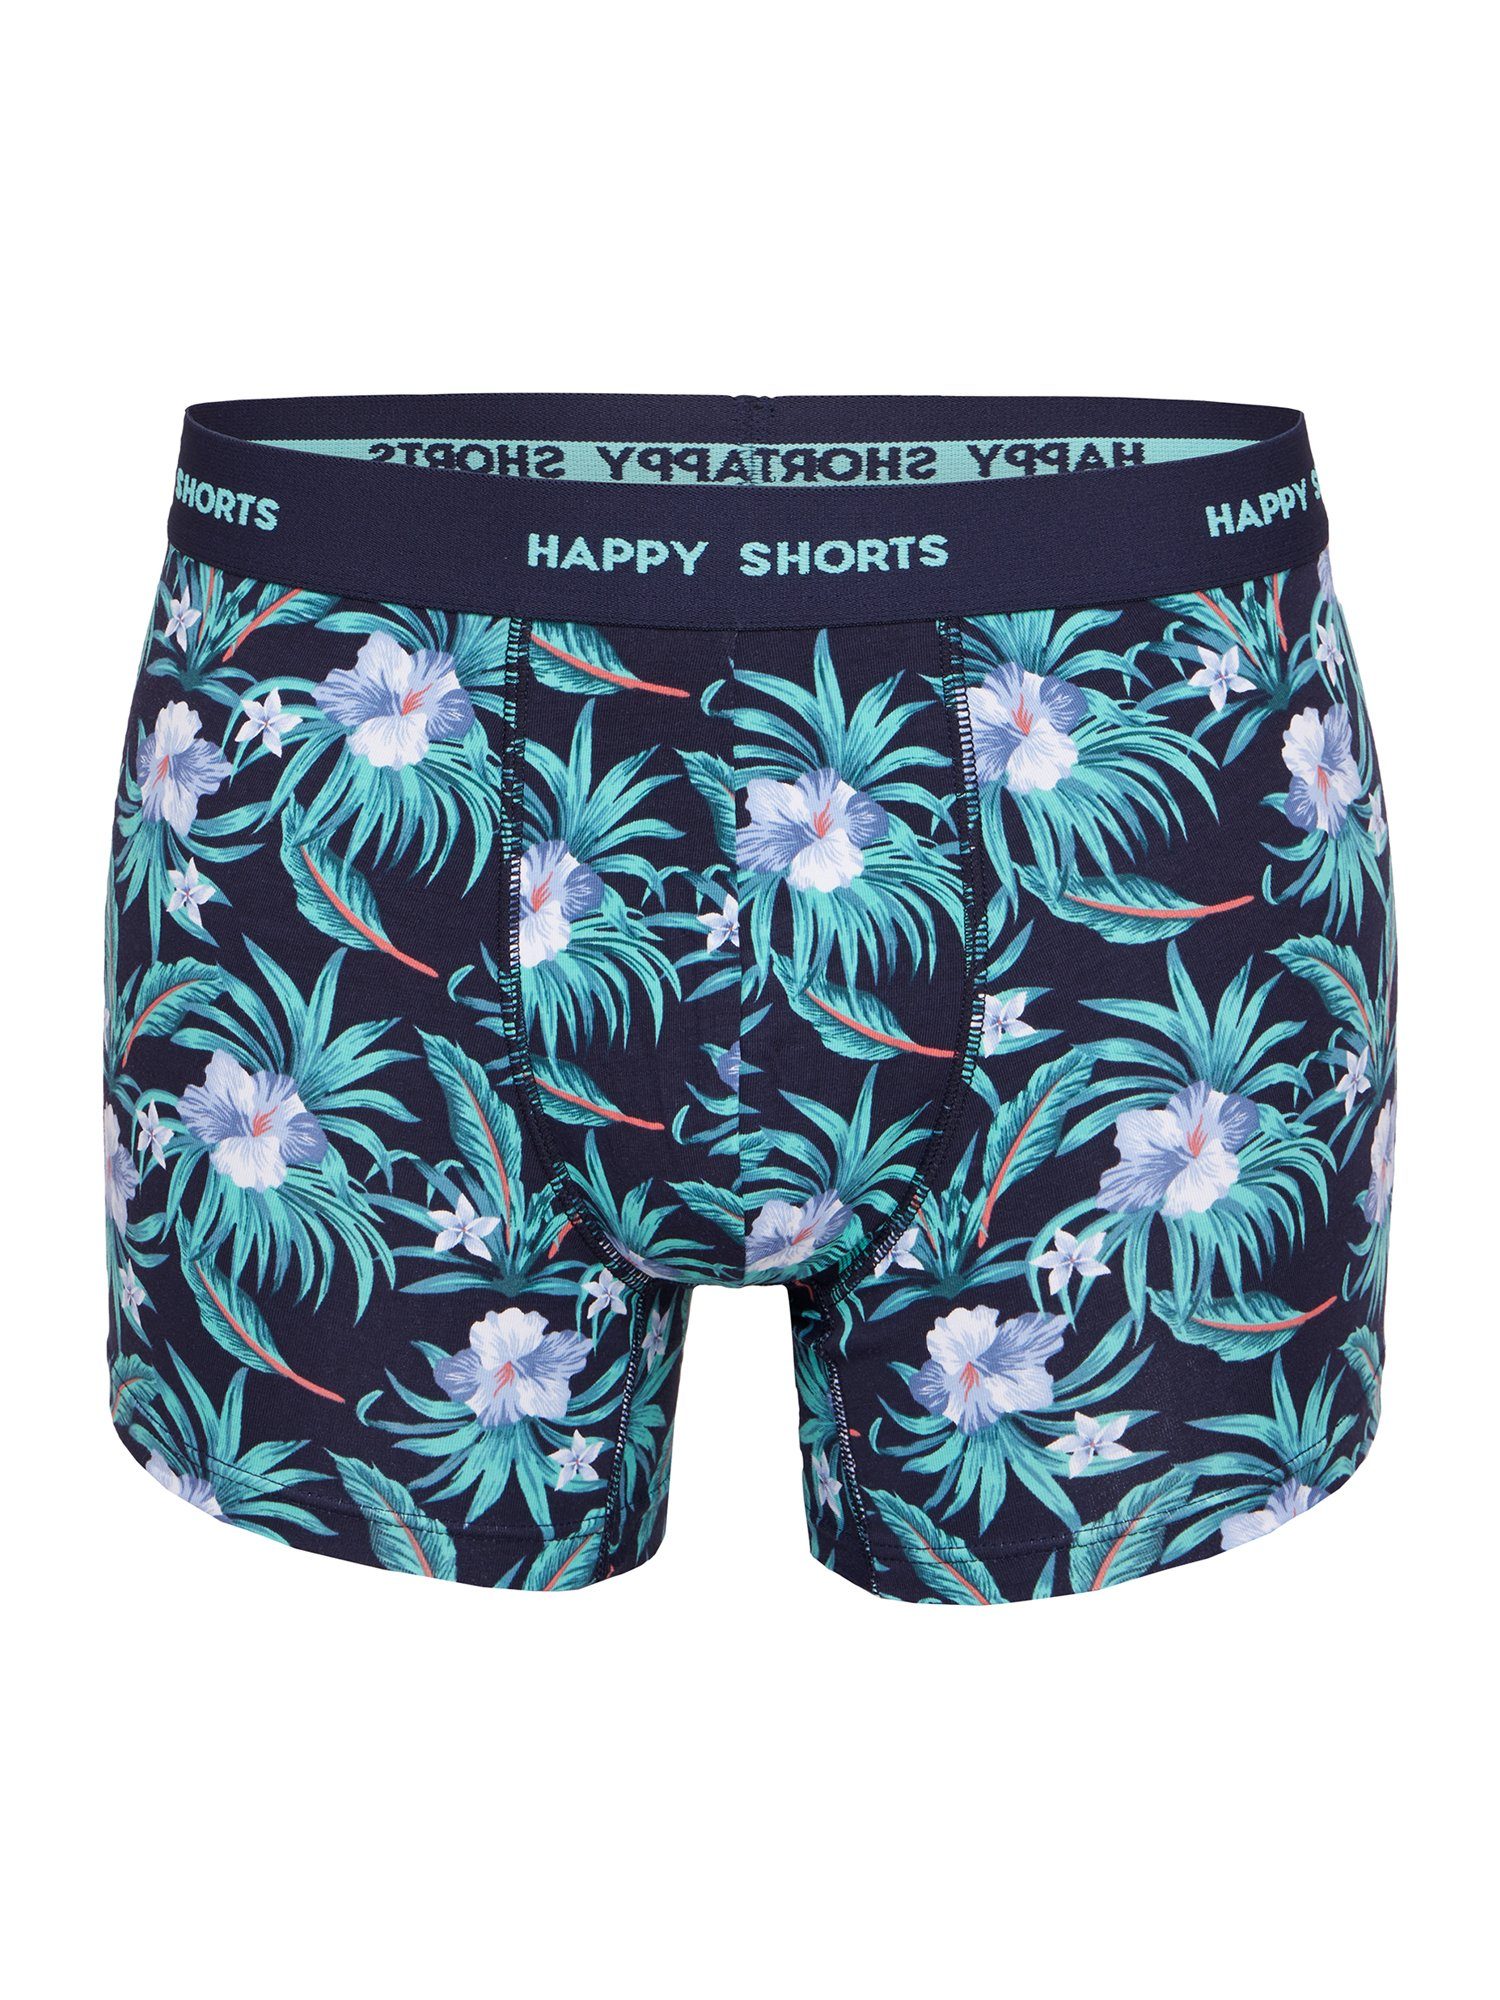 HAPPY SHORTS Retro Pants Motive (3-St) Retro-Boxer unterhose männer Hawaii2